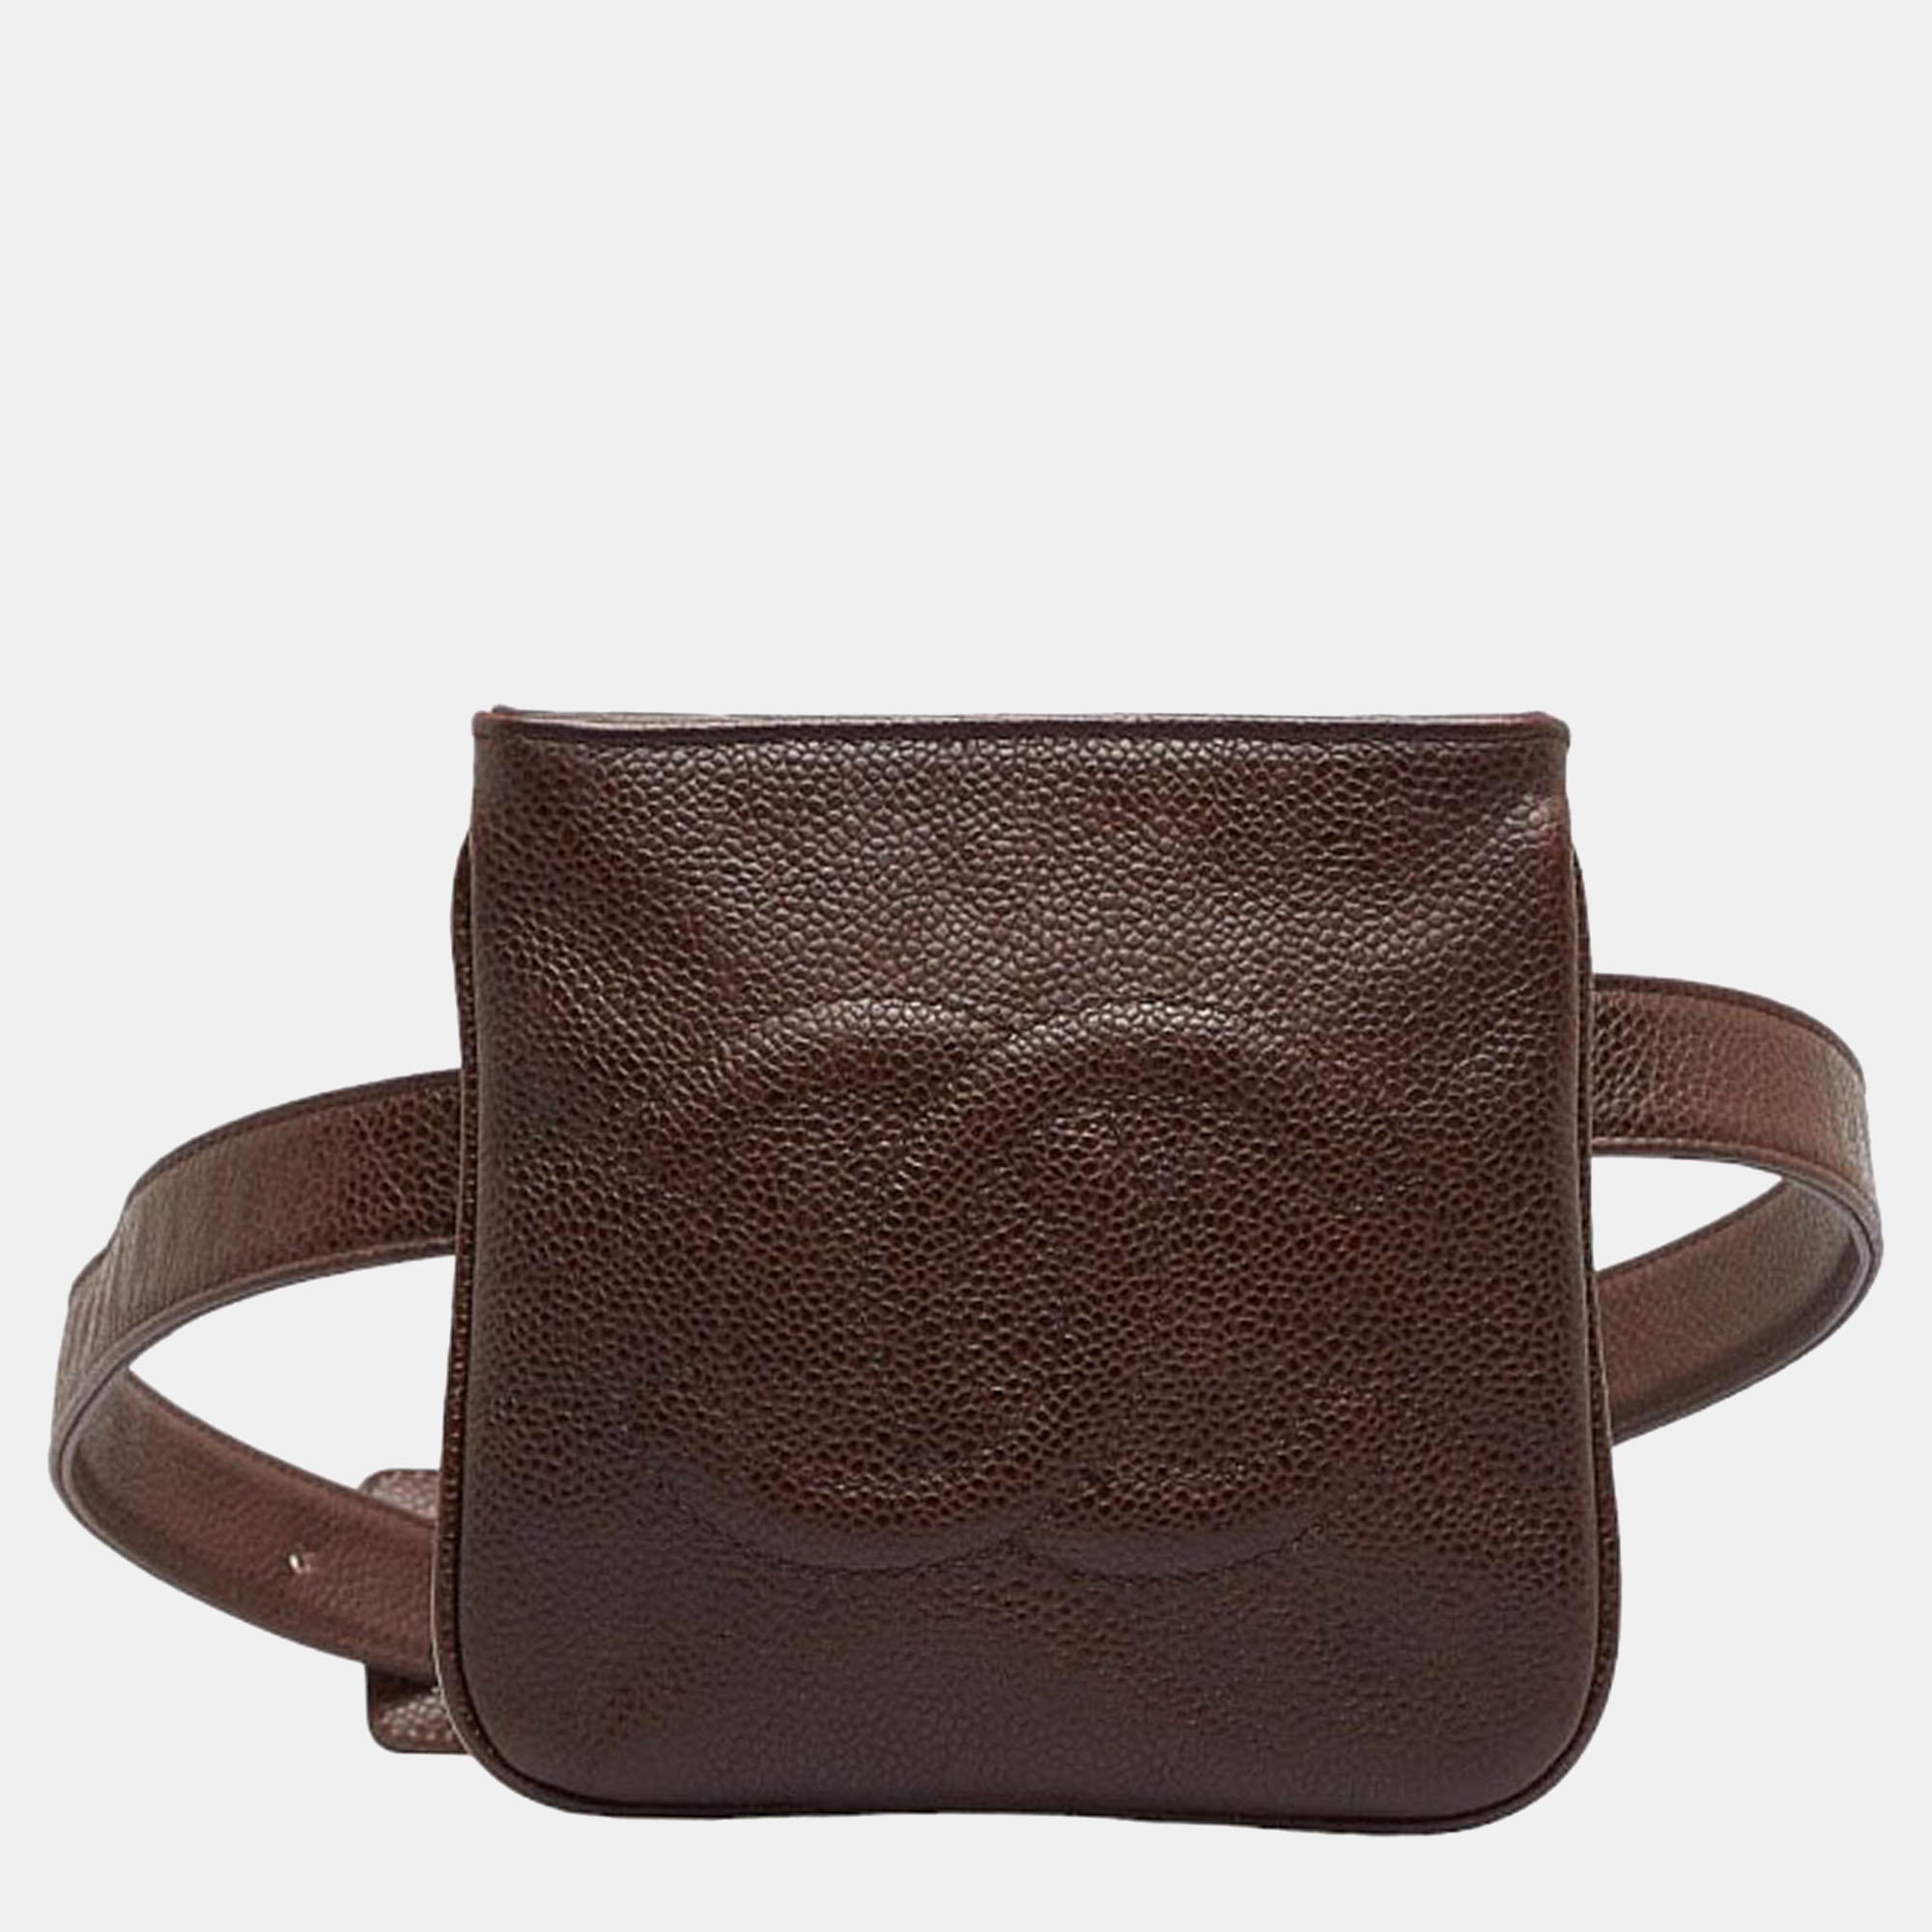 Chanel Brown Leather CC Belt Bag